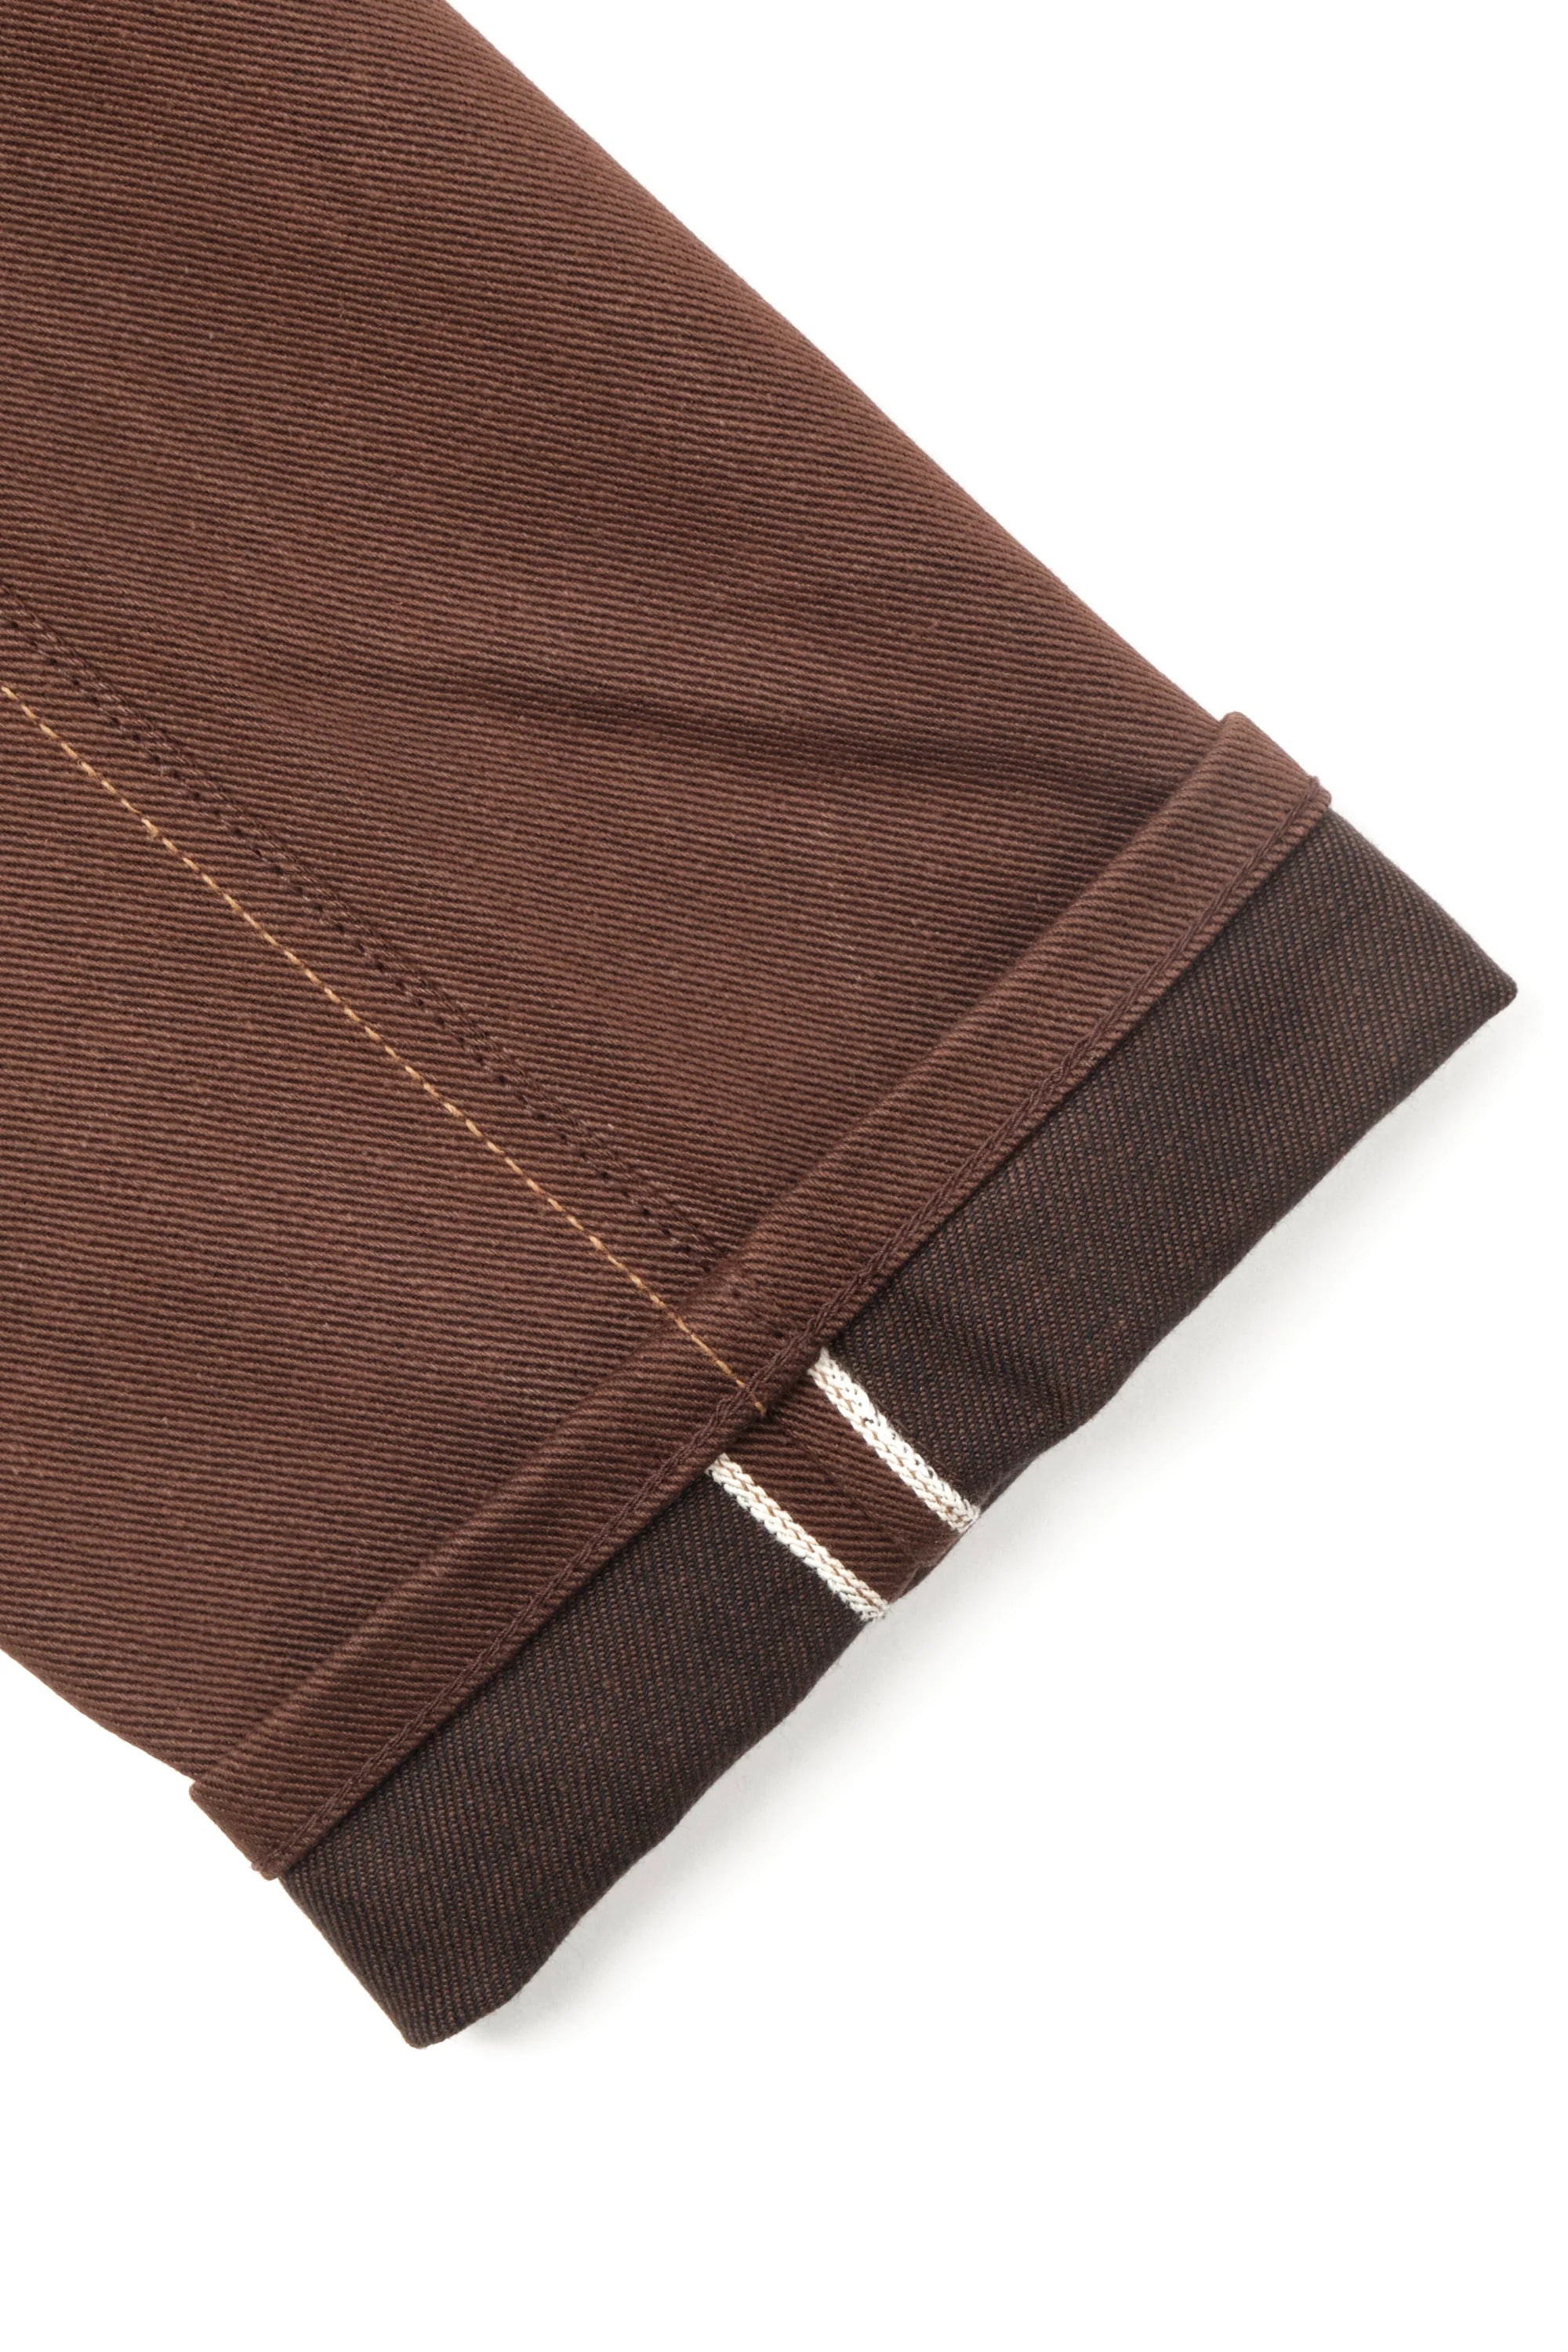 Freenote Cloth Rios - 15oz Dark Brown Denim